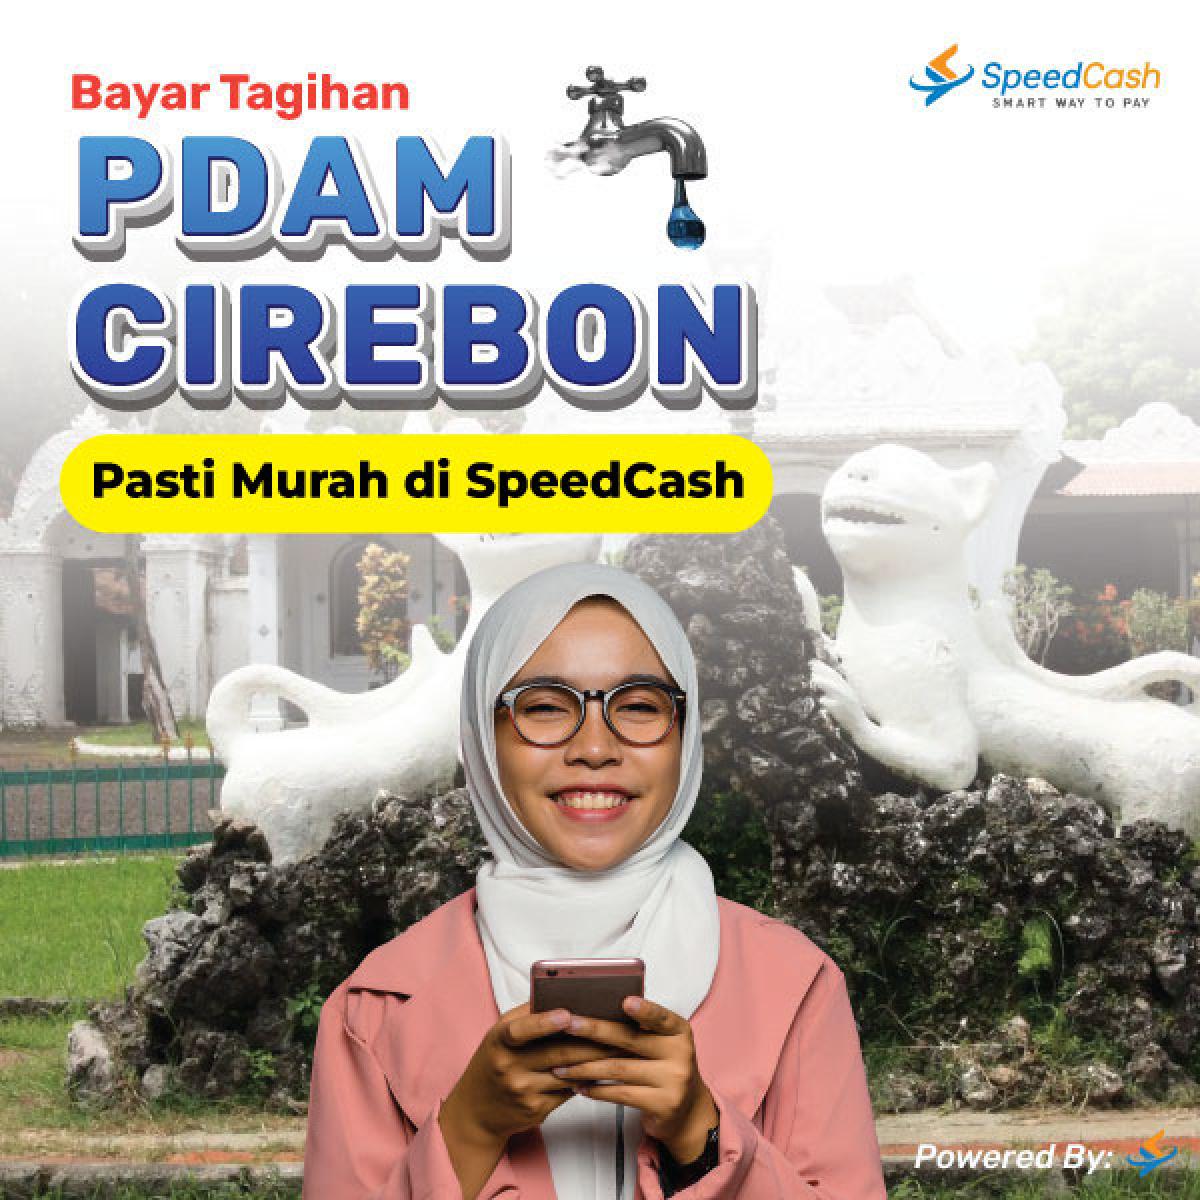 Cek tagihan pdam Cirebon dan bayar bisa melalui online - SpeedCash